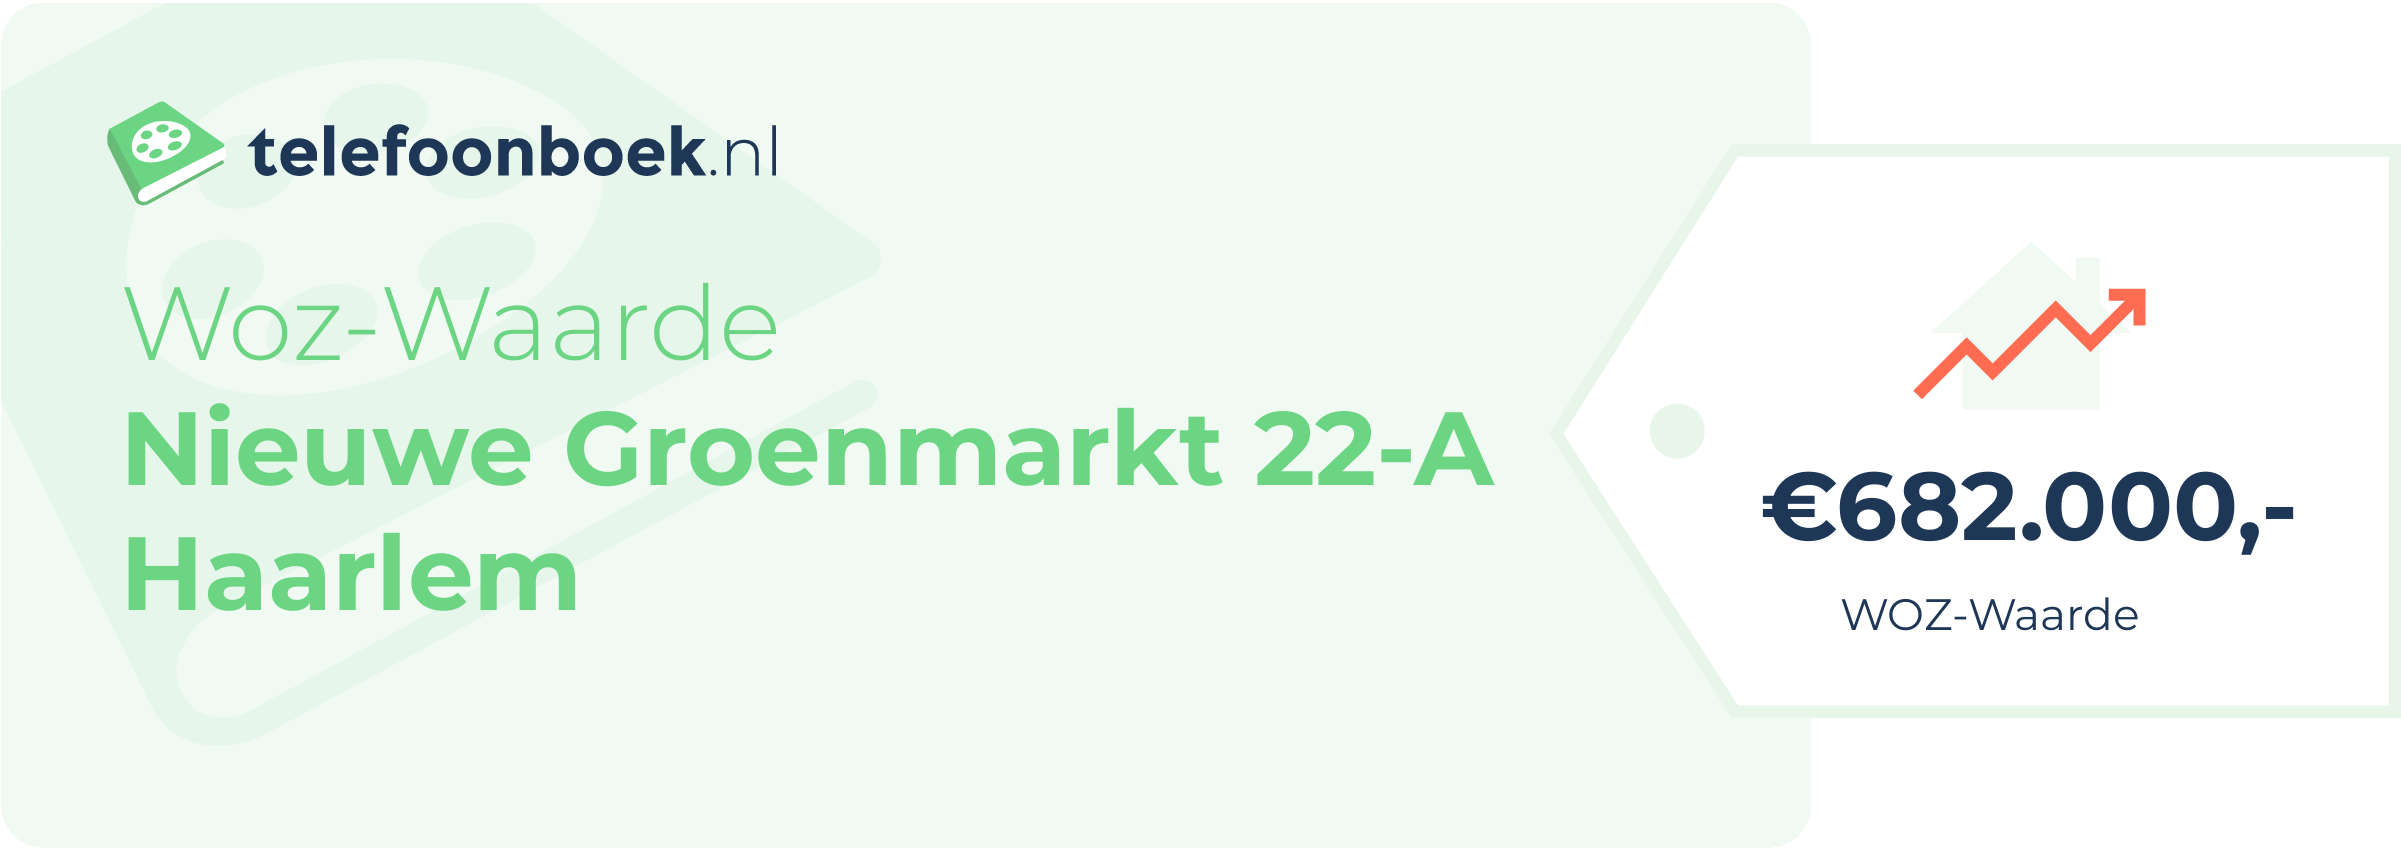 WOZ-waarde Nieuwe Groenmarkt 22-A Haarlem